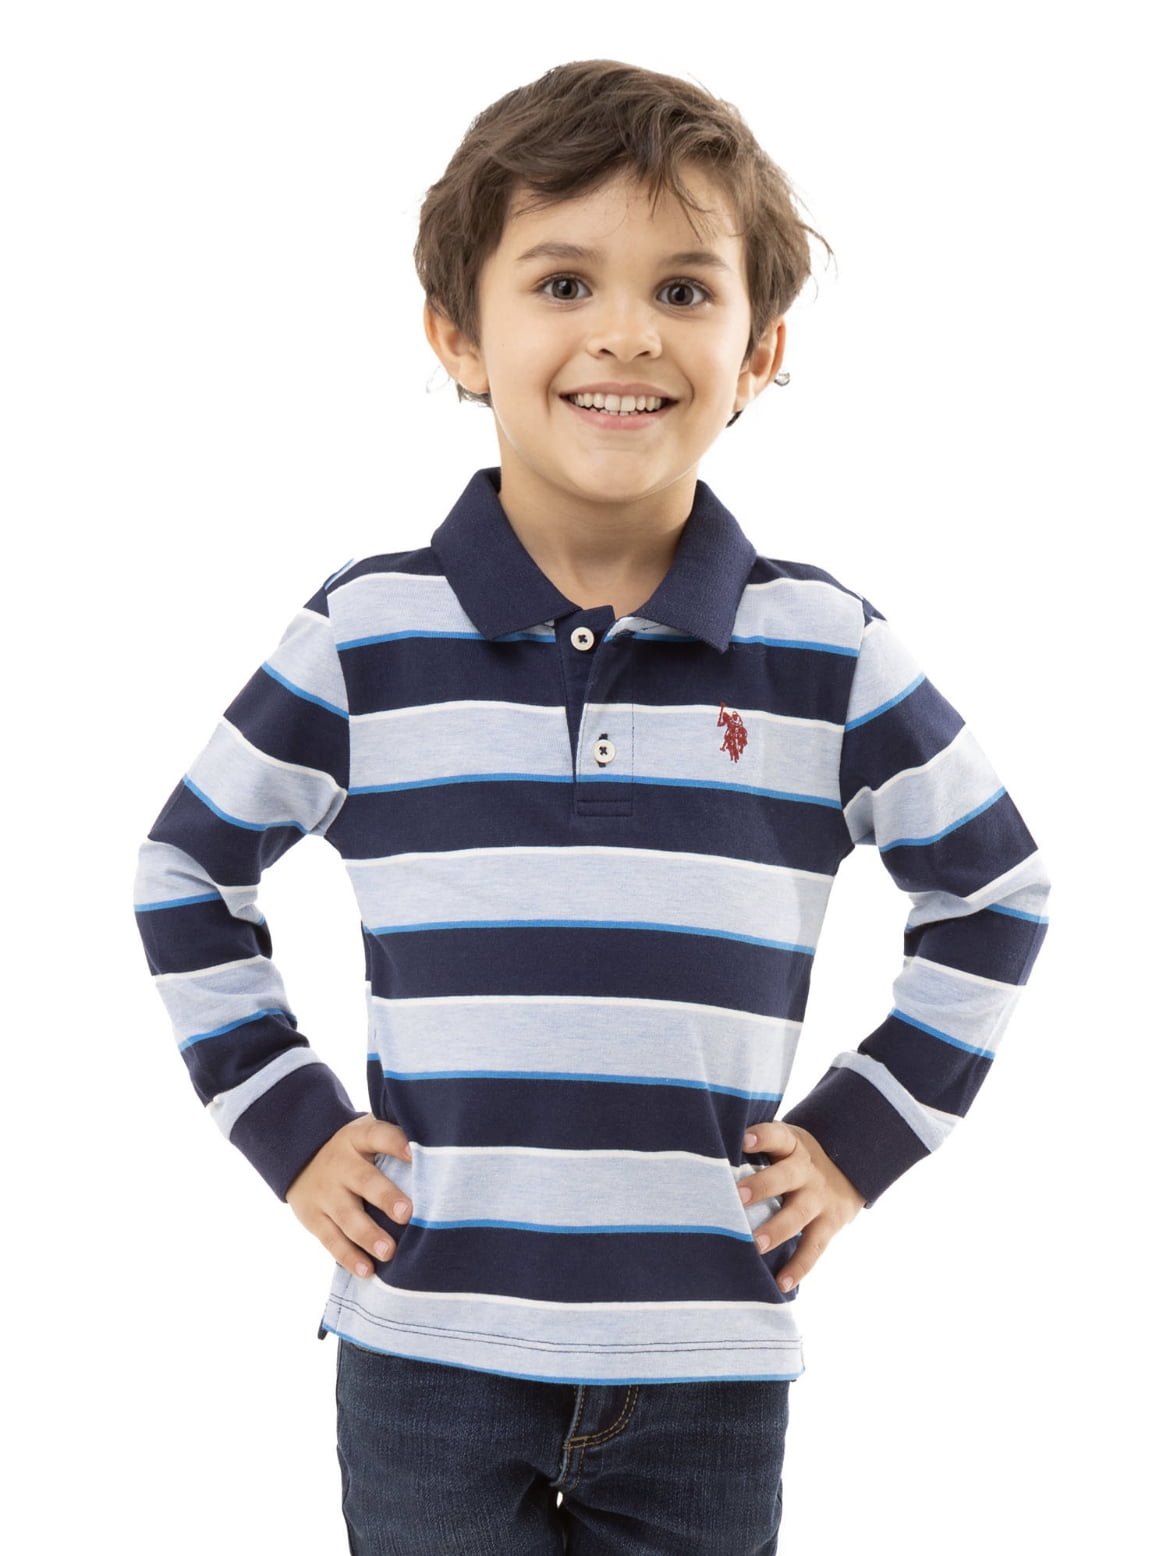 U.S. Polo Assn. Toddler Boy Long Sleeve Rugby Shirt, Sizes 2T-5T ...